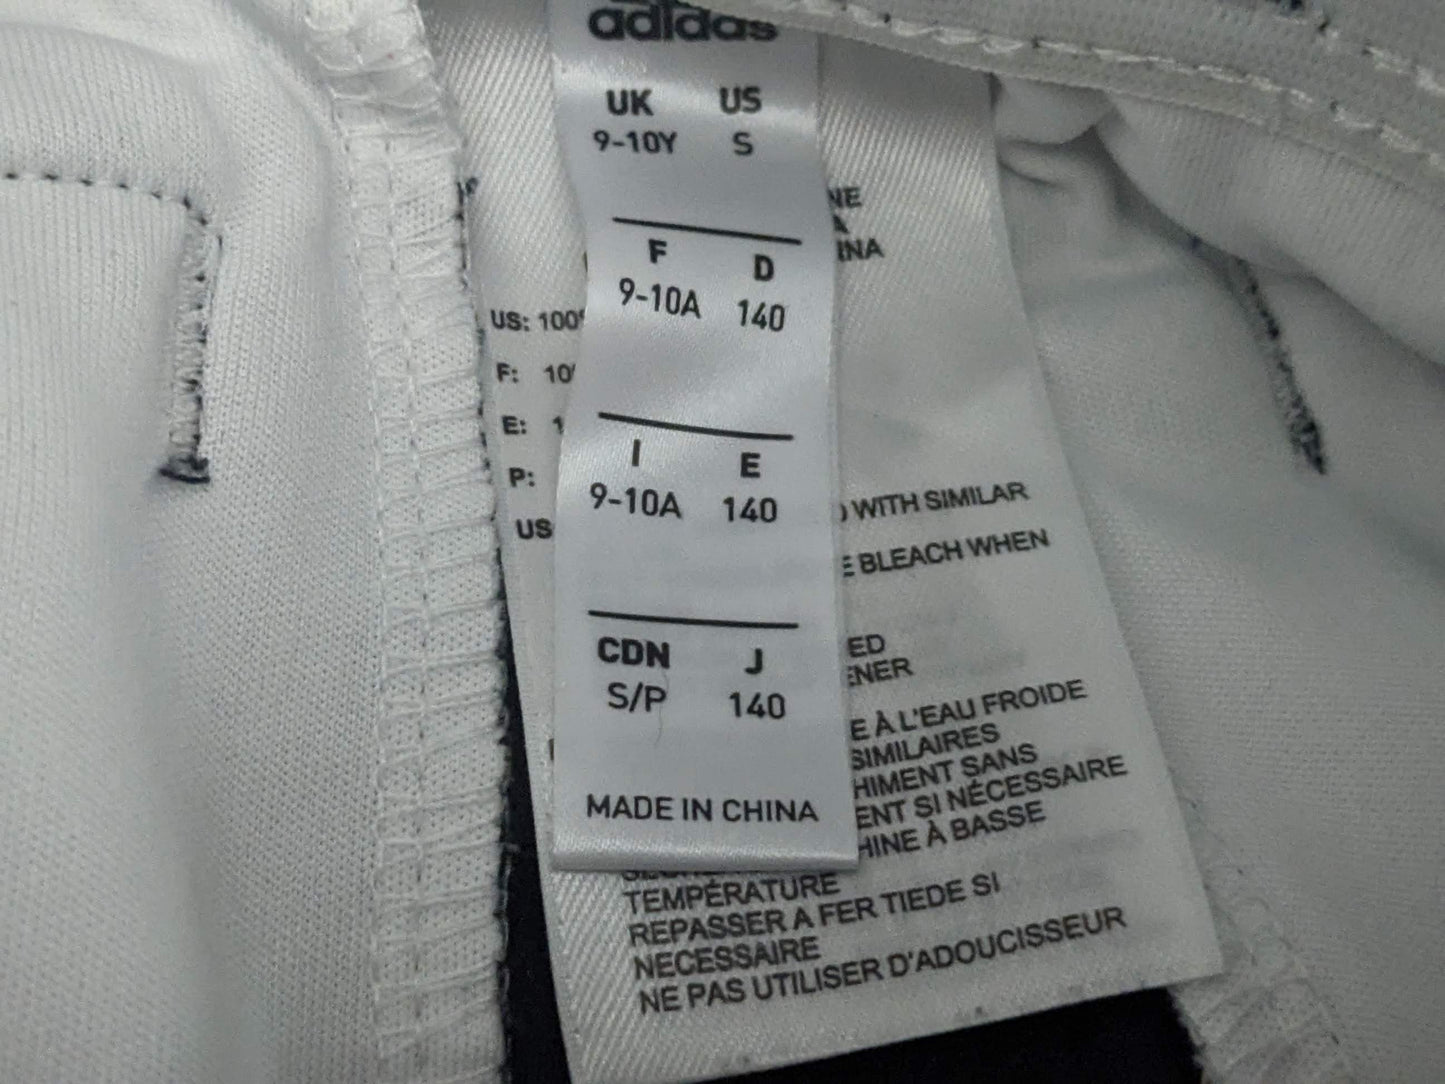 Adidas Baseball Pants Size Small Color Black Condition Used